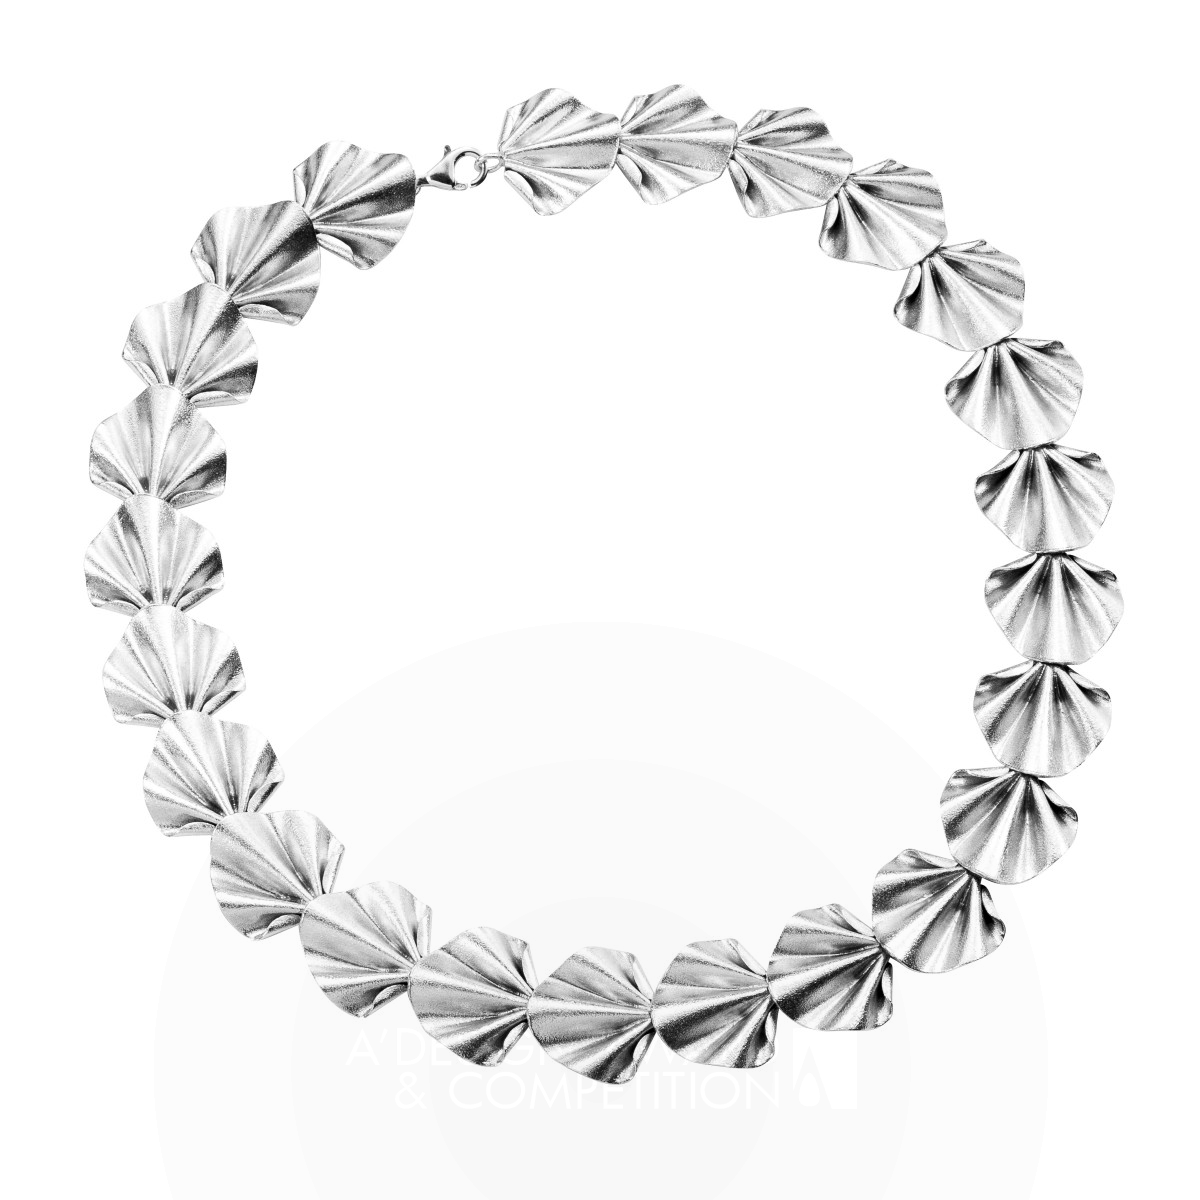 Waves Necklace by Anna-Reetta Vaananen Silver Jewelry Design Award Winner 2021 